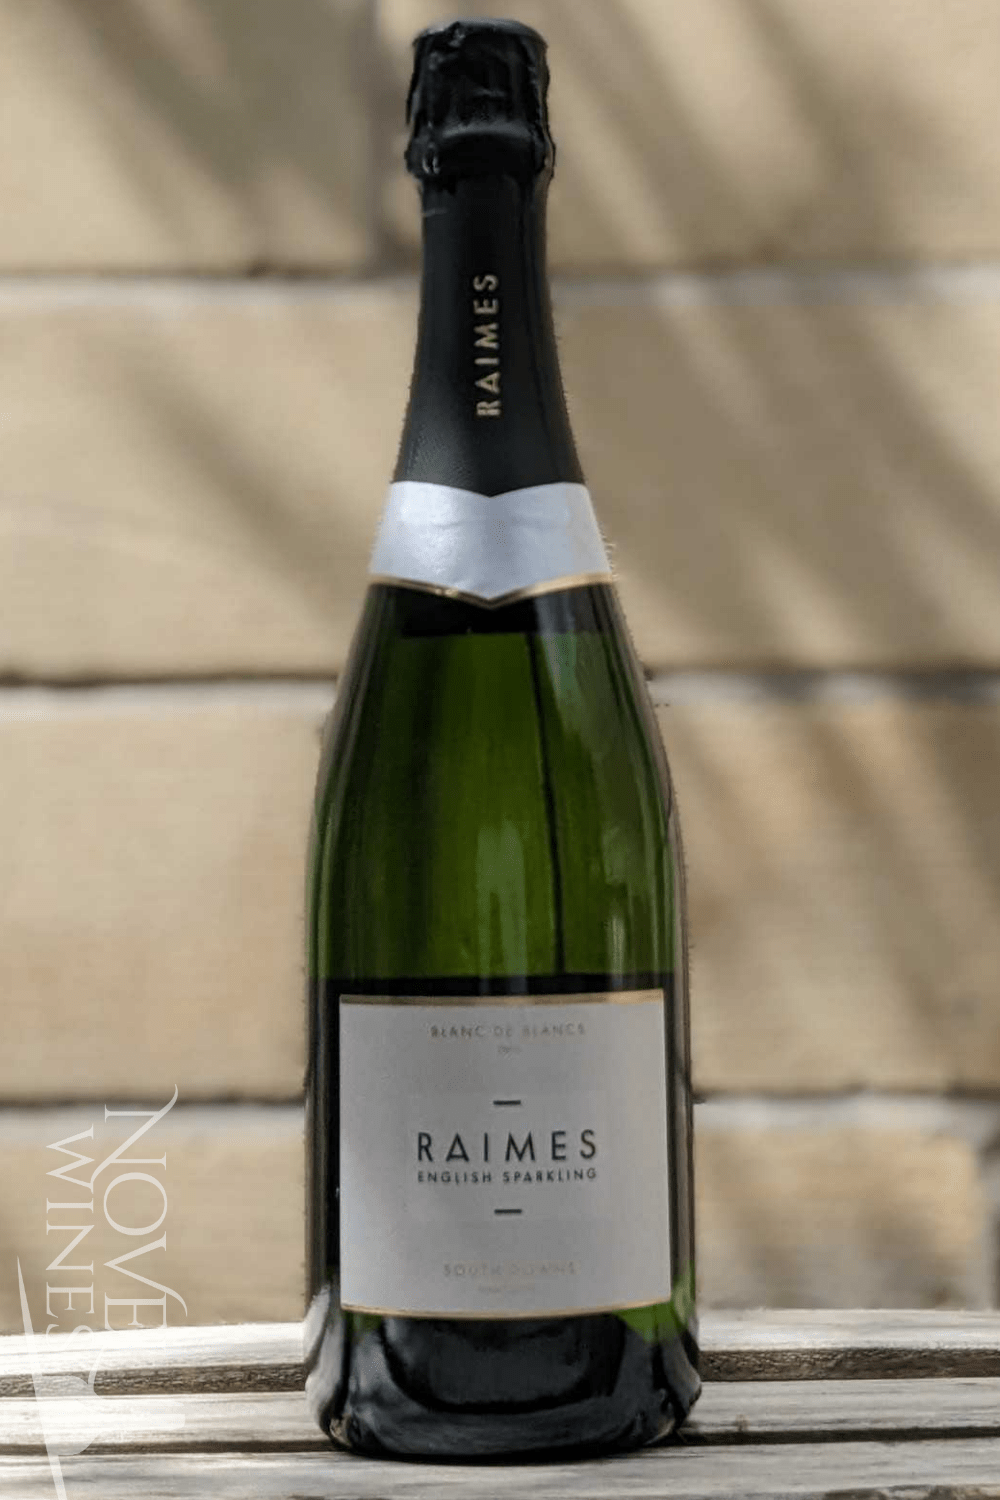 Raimes Sparkling Wine Raimes Blanc de Blancs 2016, England